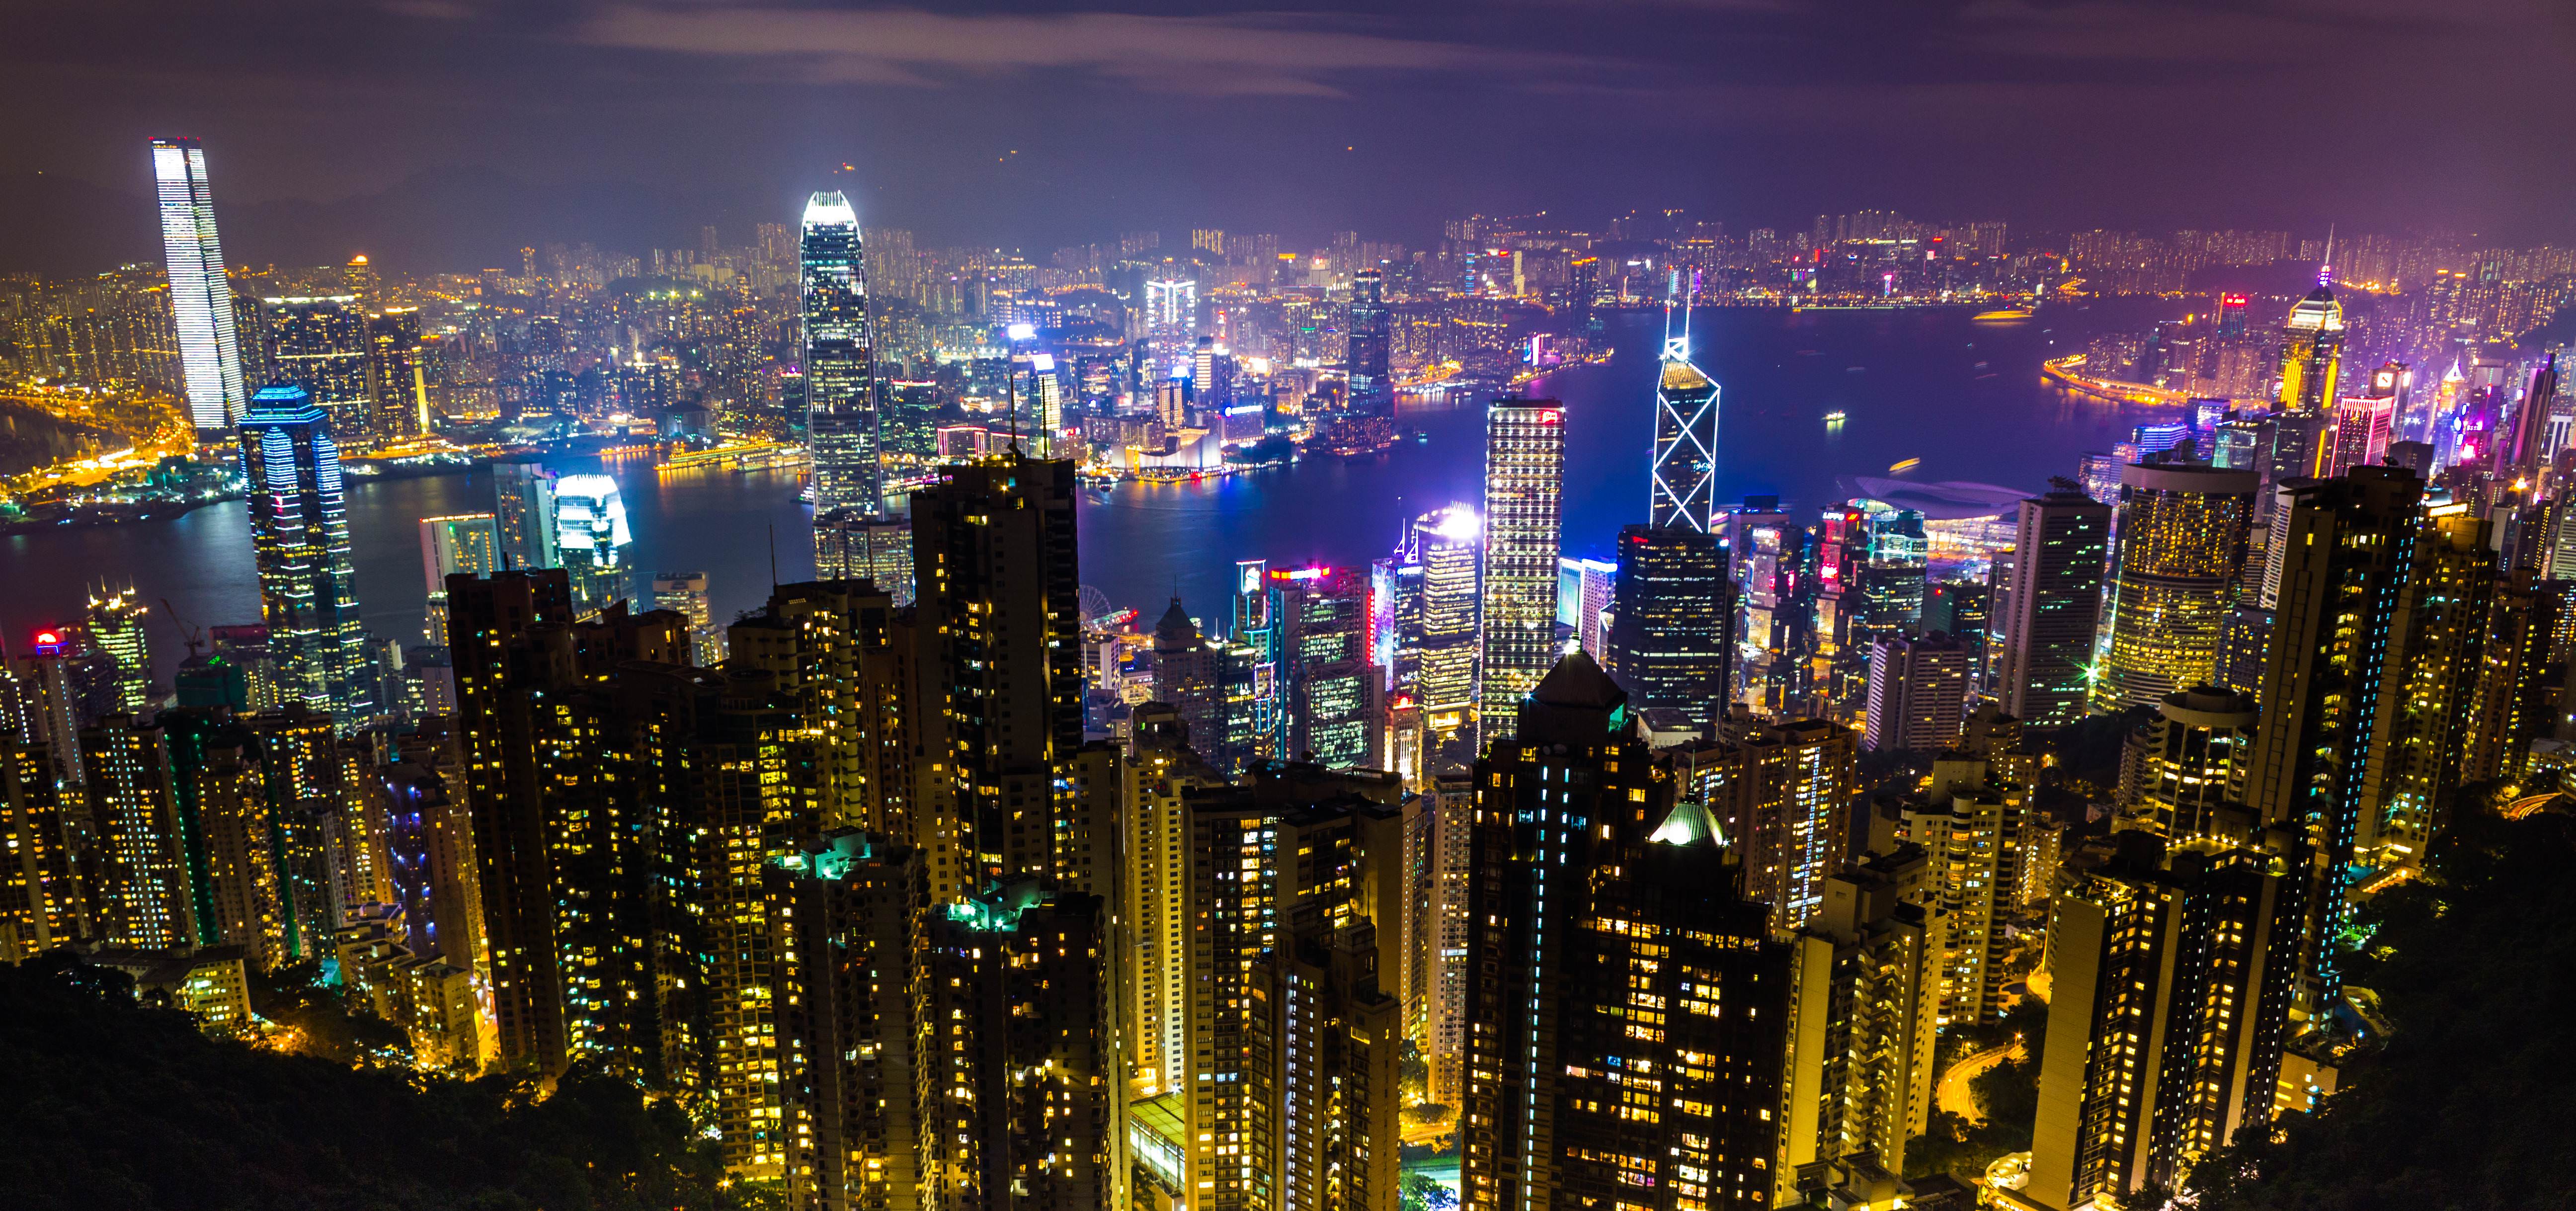 Hong Kong city skyline - Album on Imgur